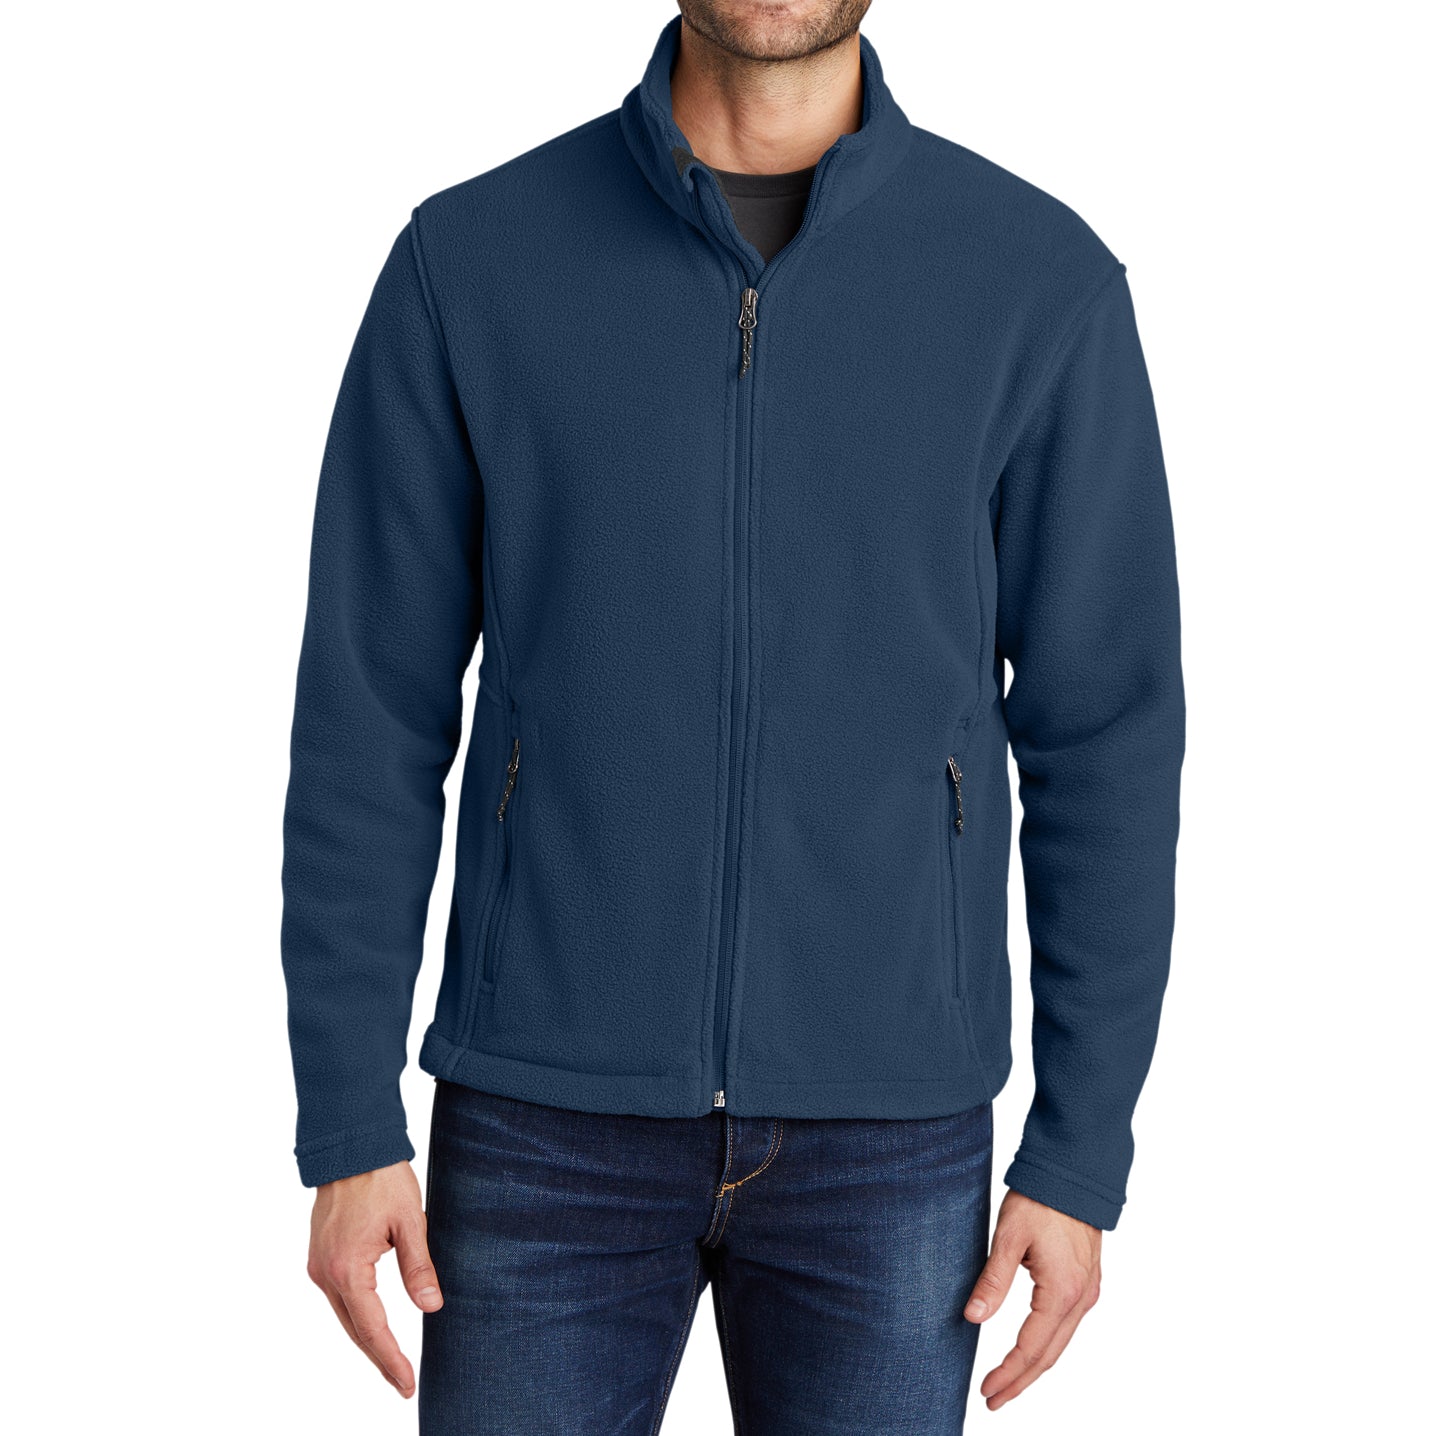 Men's Midweight Value Fleece Jacket